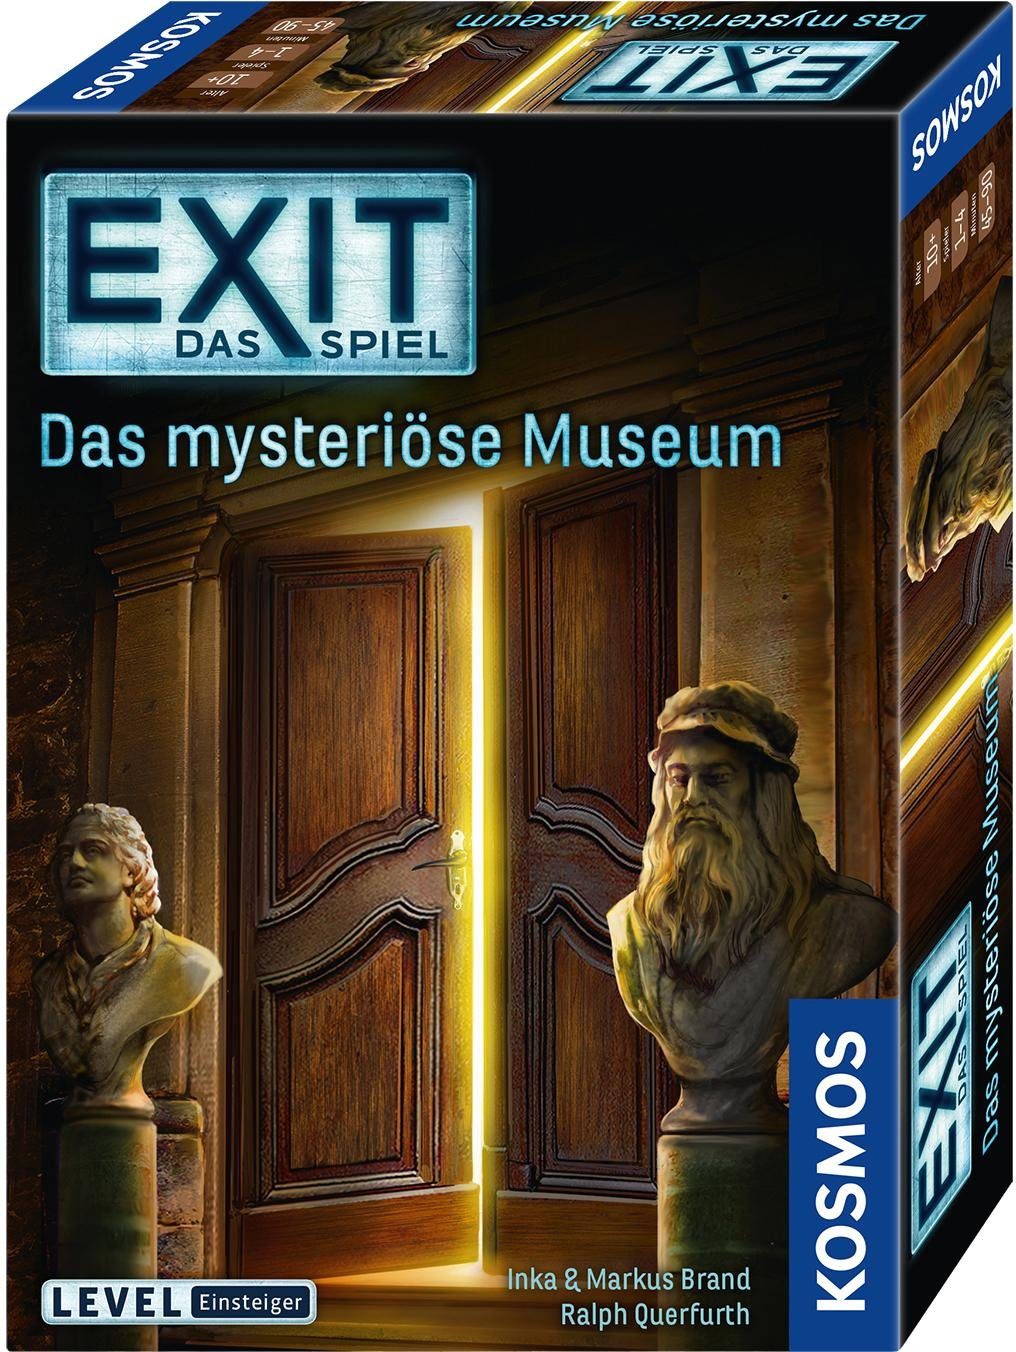 - Das Spiel, Kosmos EXIT mysteriöse Museum, in Germany Made